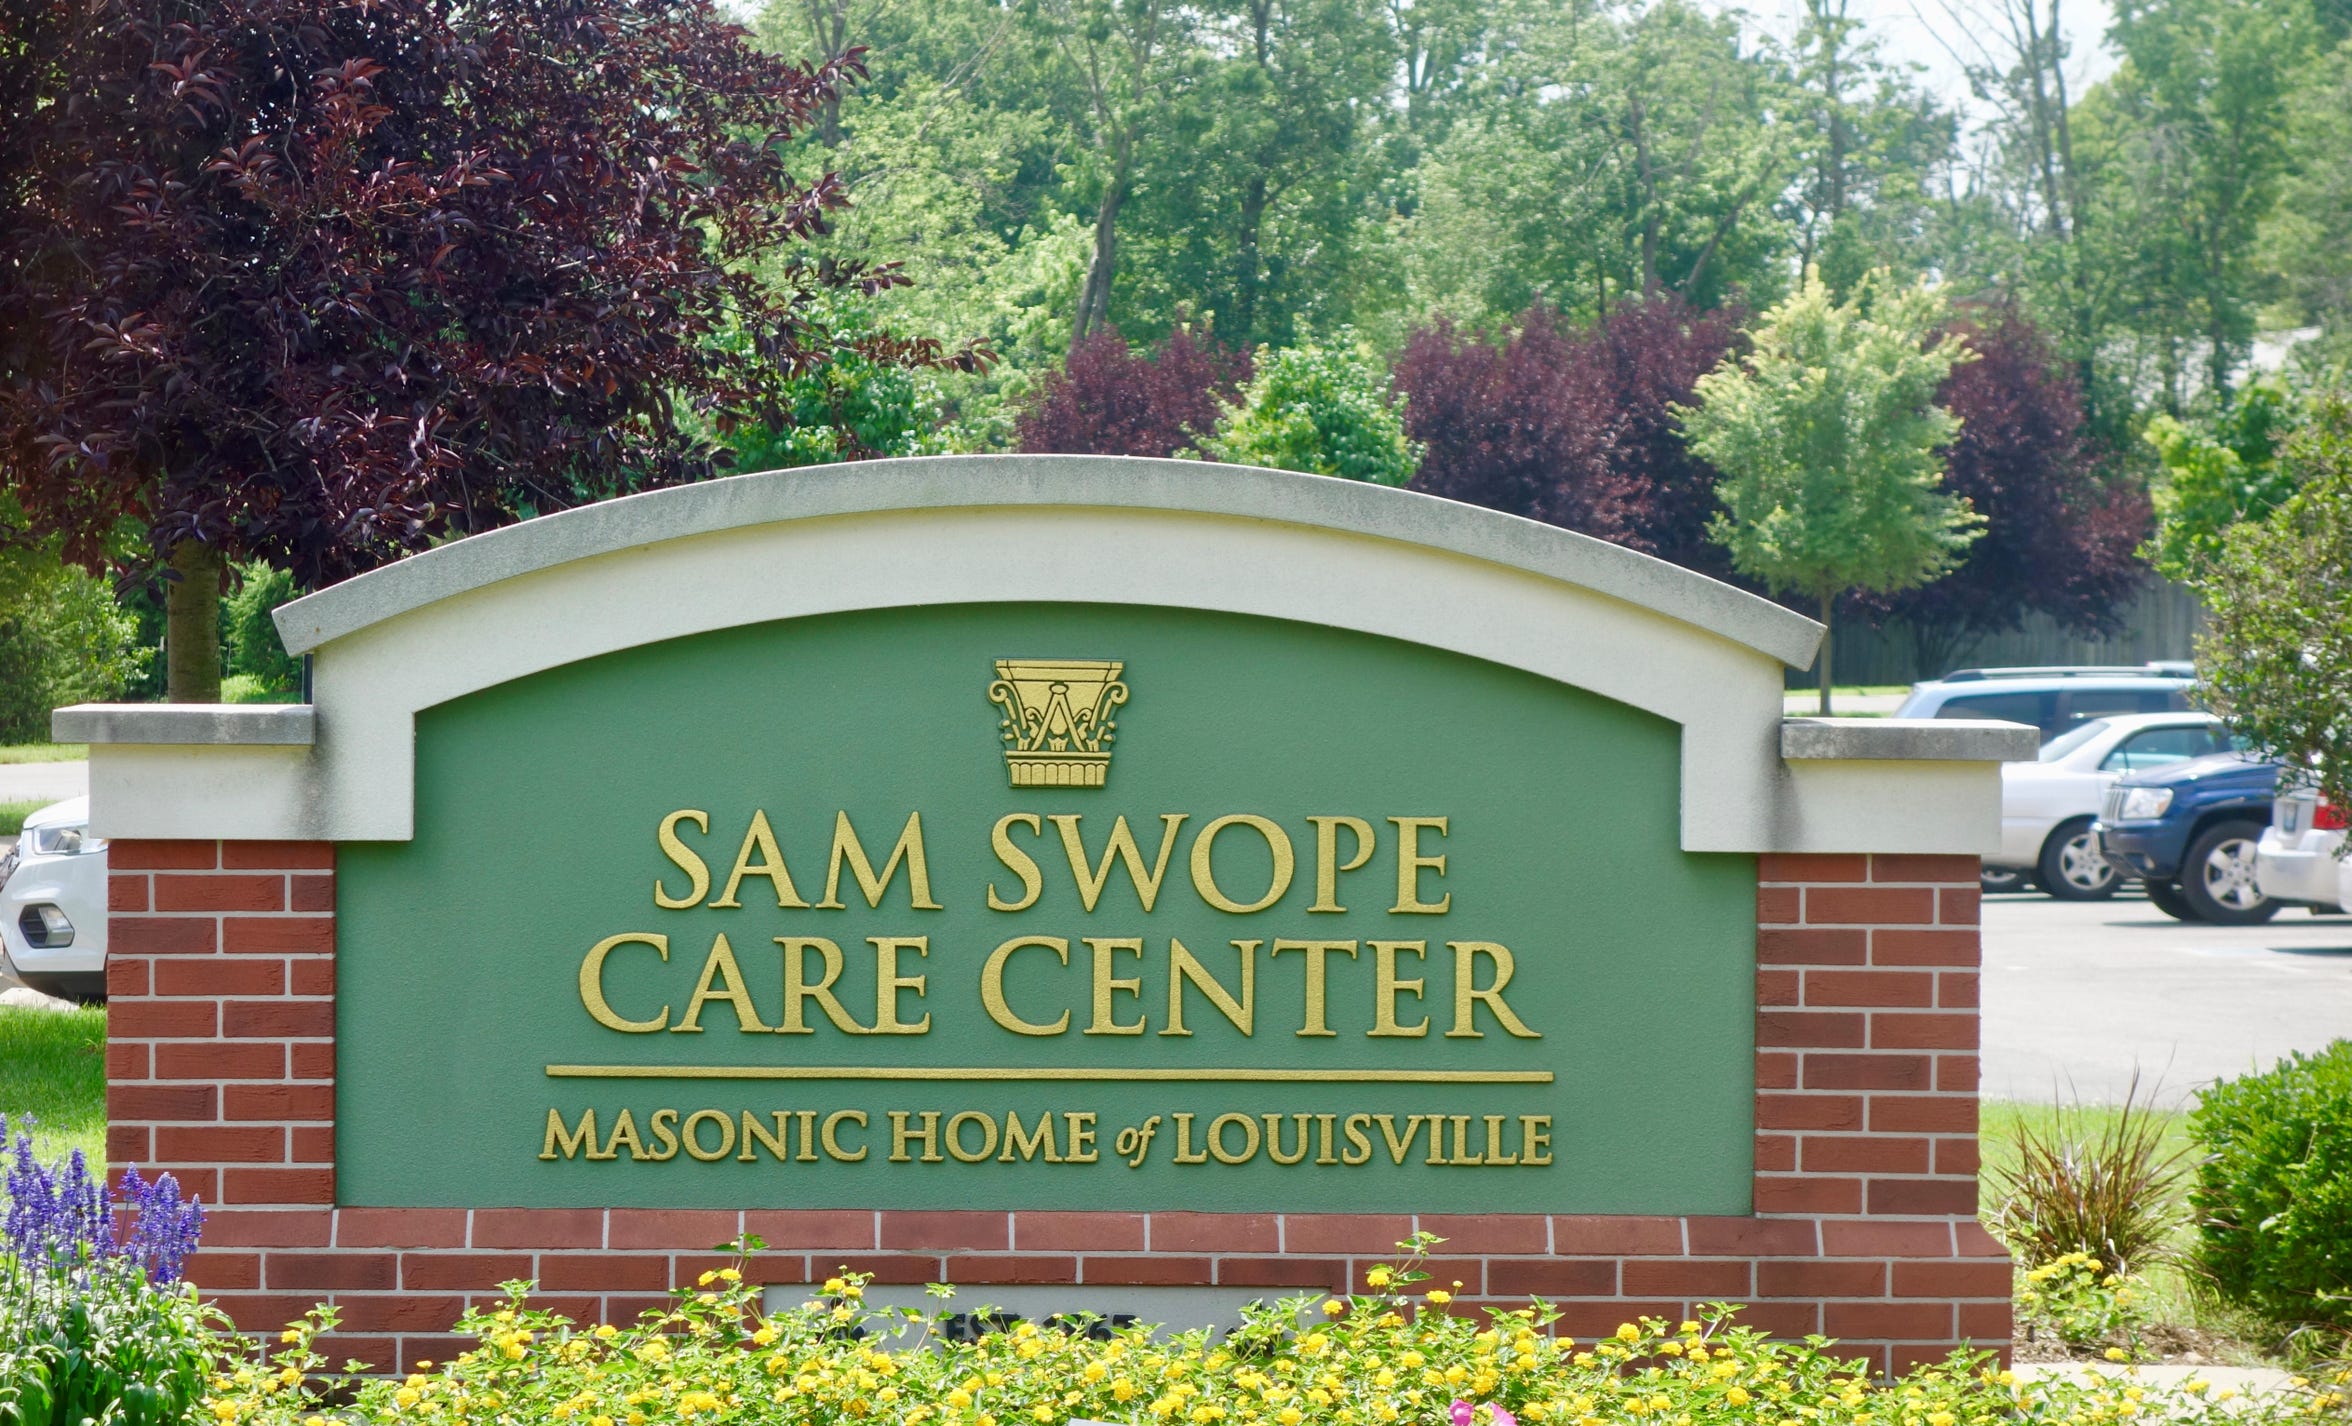 Sam Swope Care Center at Masonic Home of Louisville